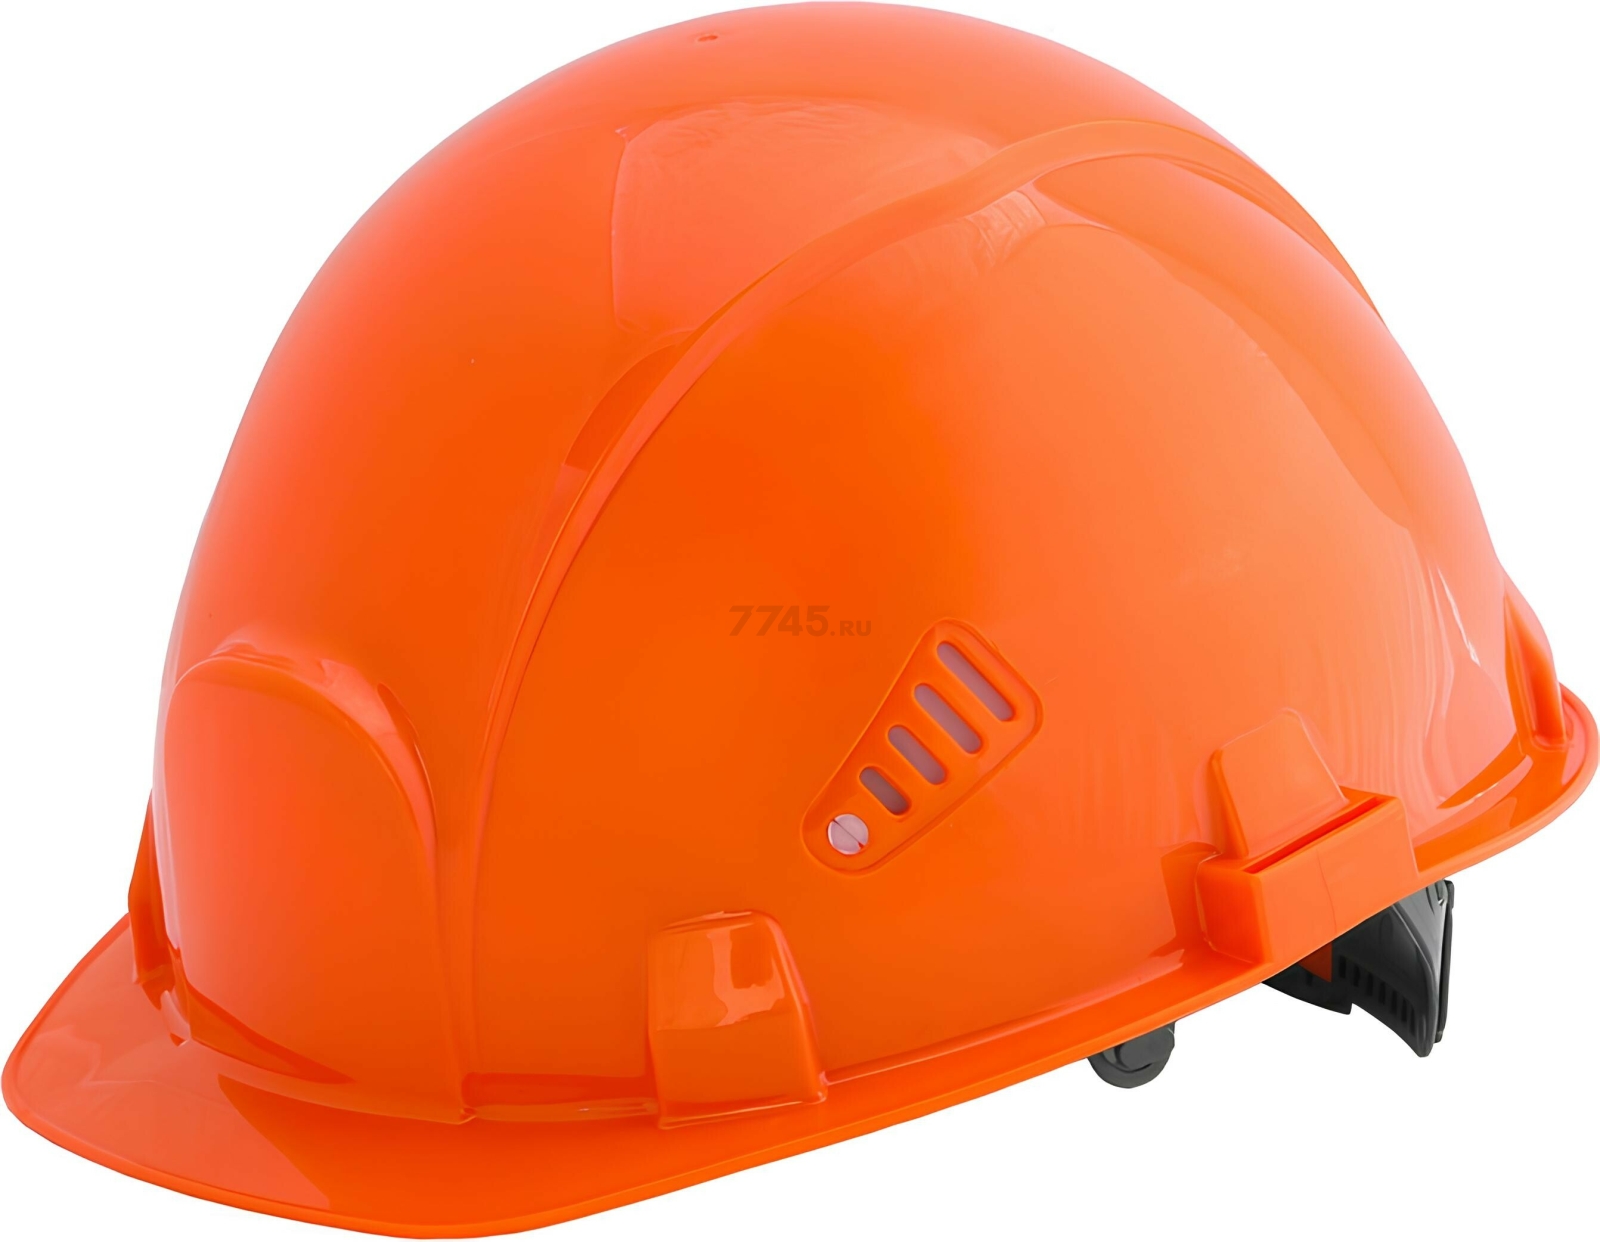 Каска защитная СОМЗ 55 Визион Rapid оранжевая (78714)